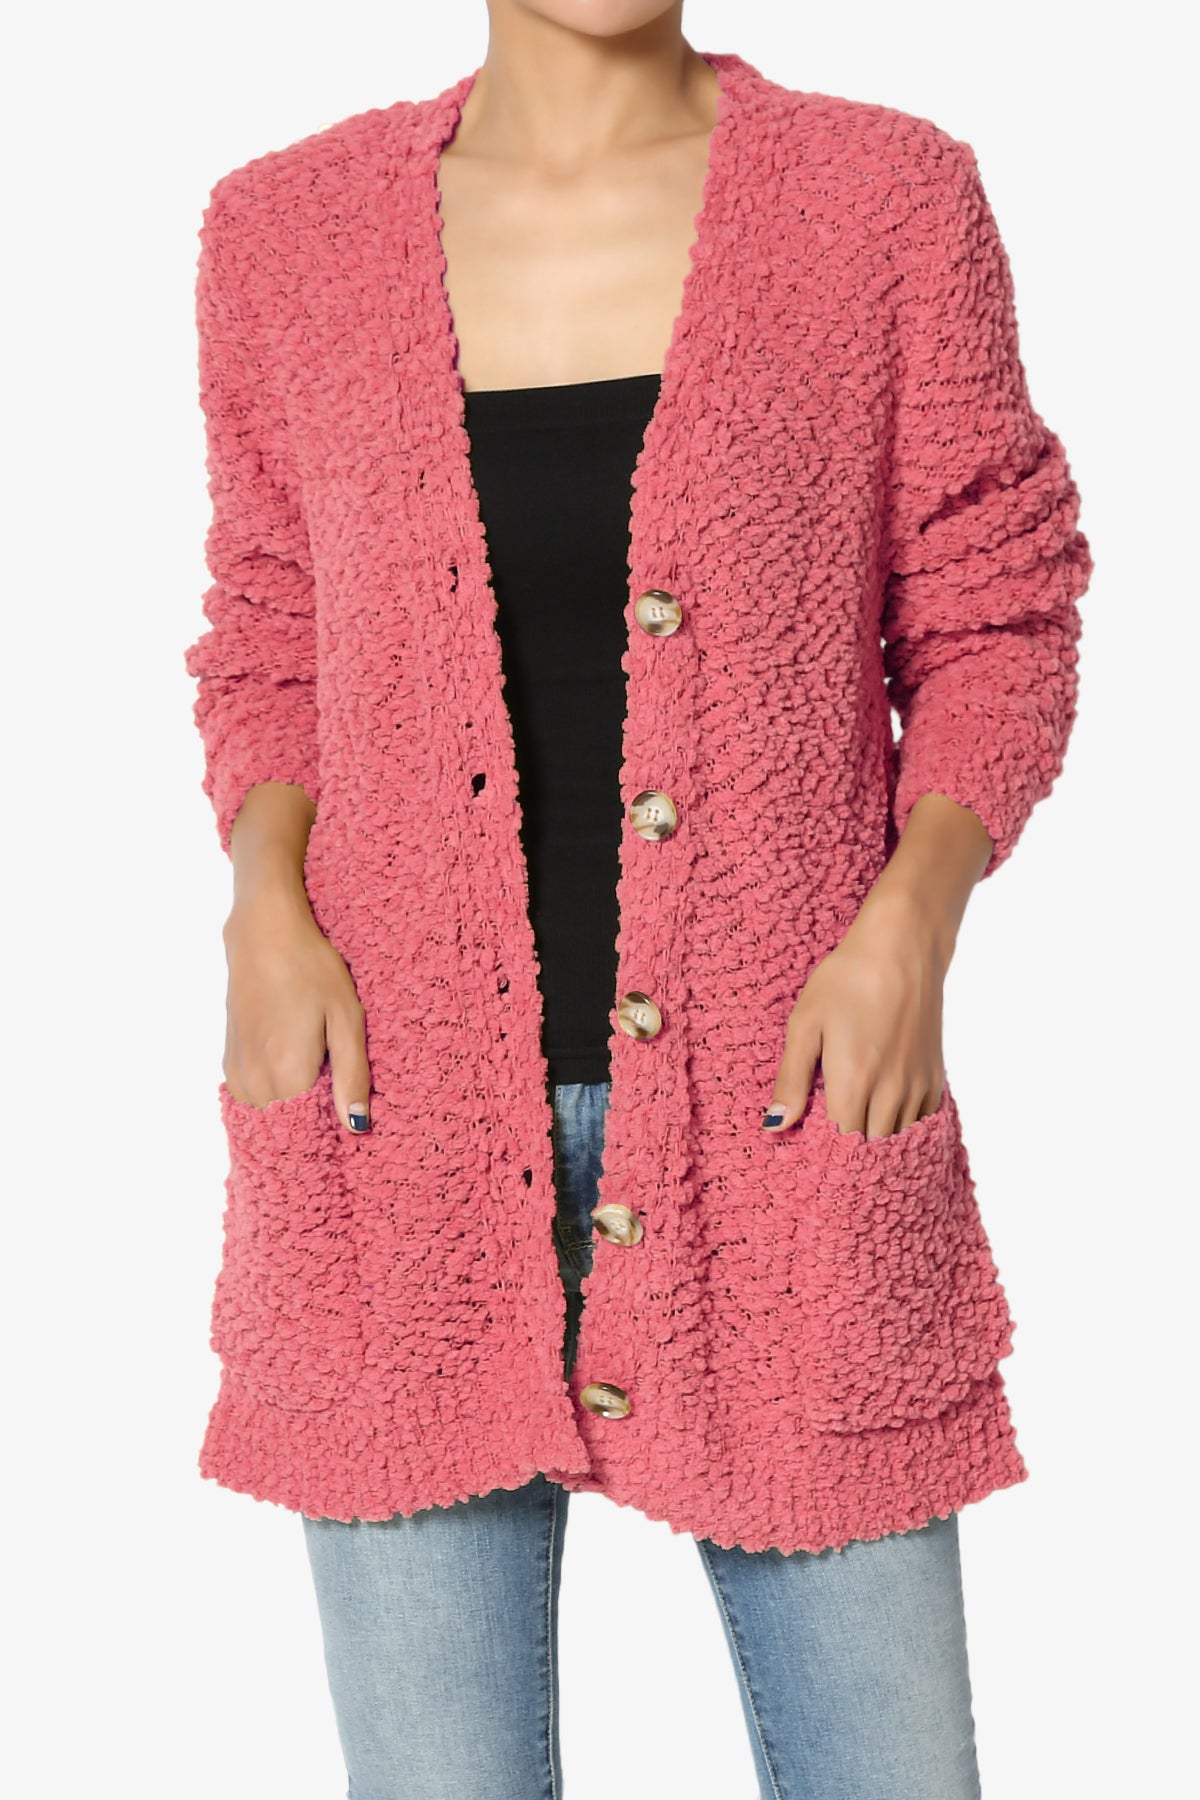 Barry Button Teddy Knit Sweater Cardigan DESERT ROSE_1